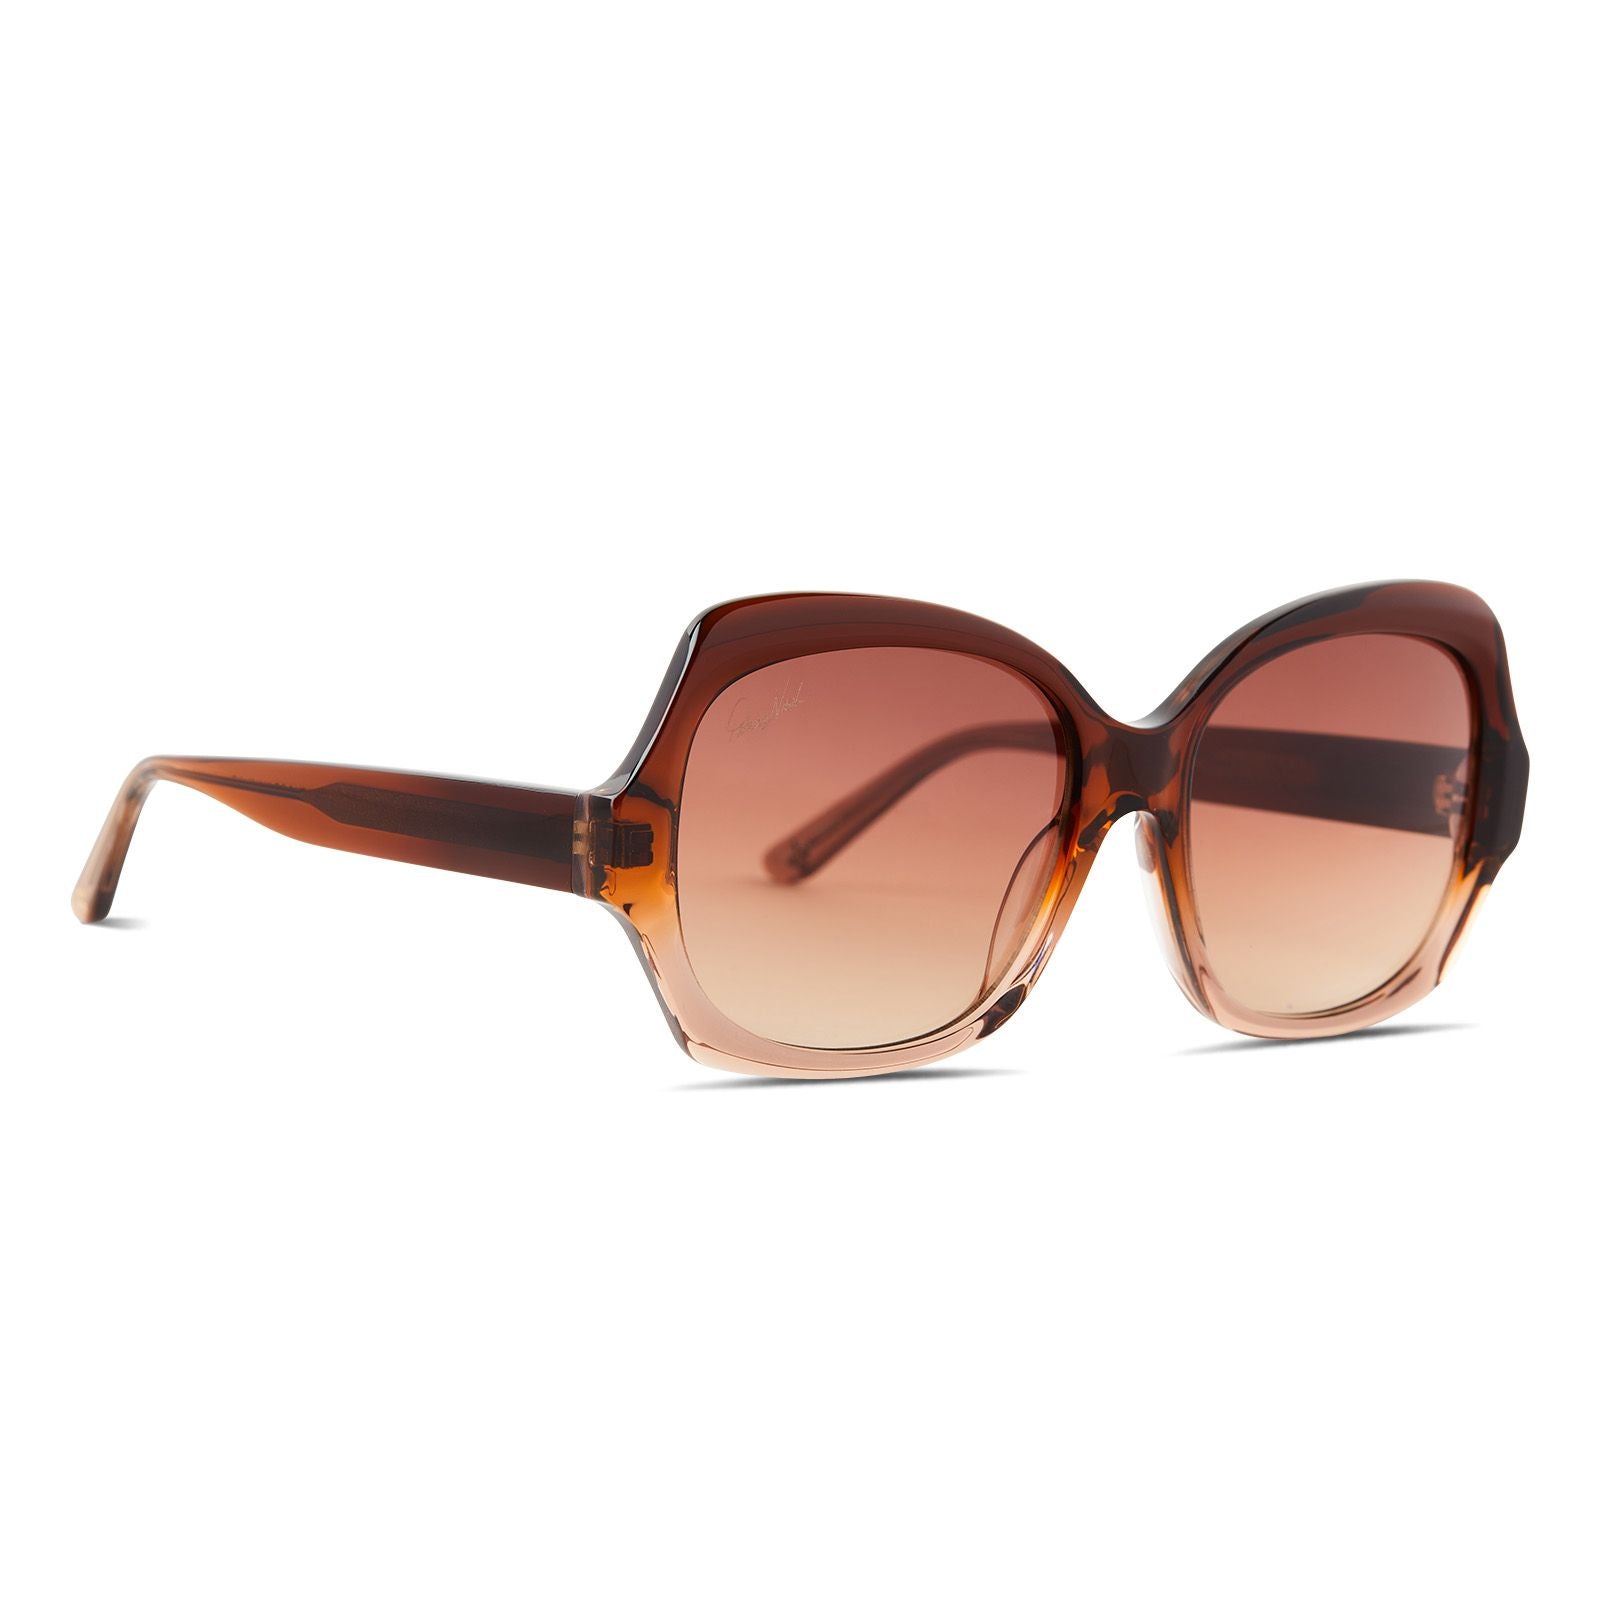 DIFF | Farrah - Tan Sand Ombre + Brown Gradient Sunglasses